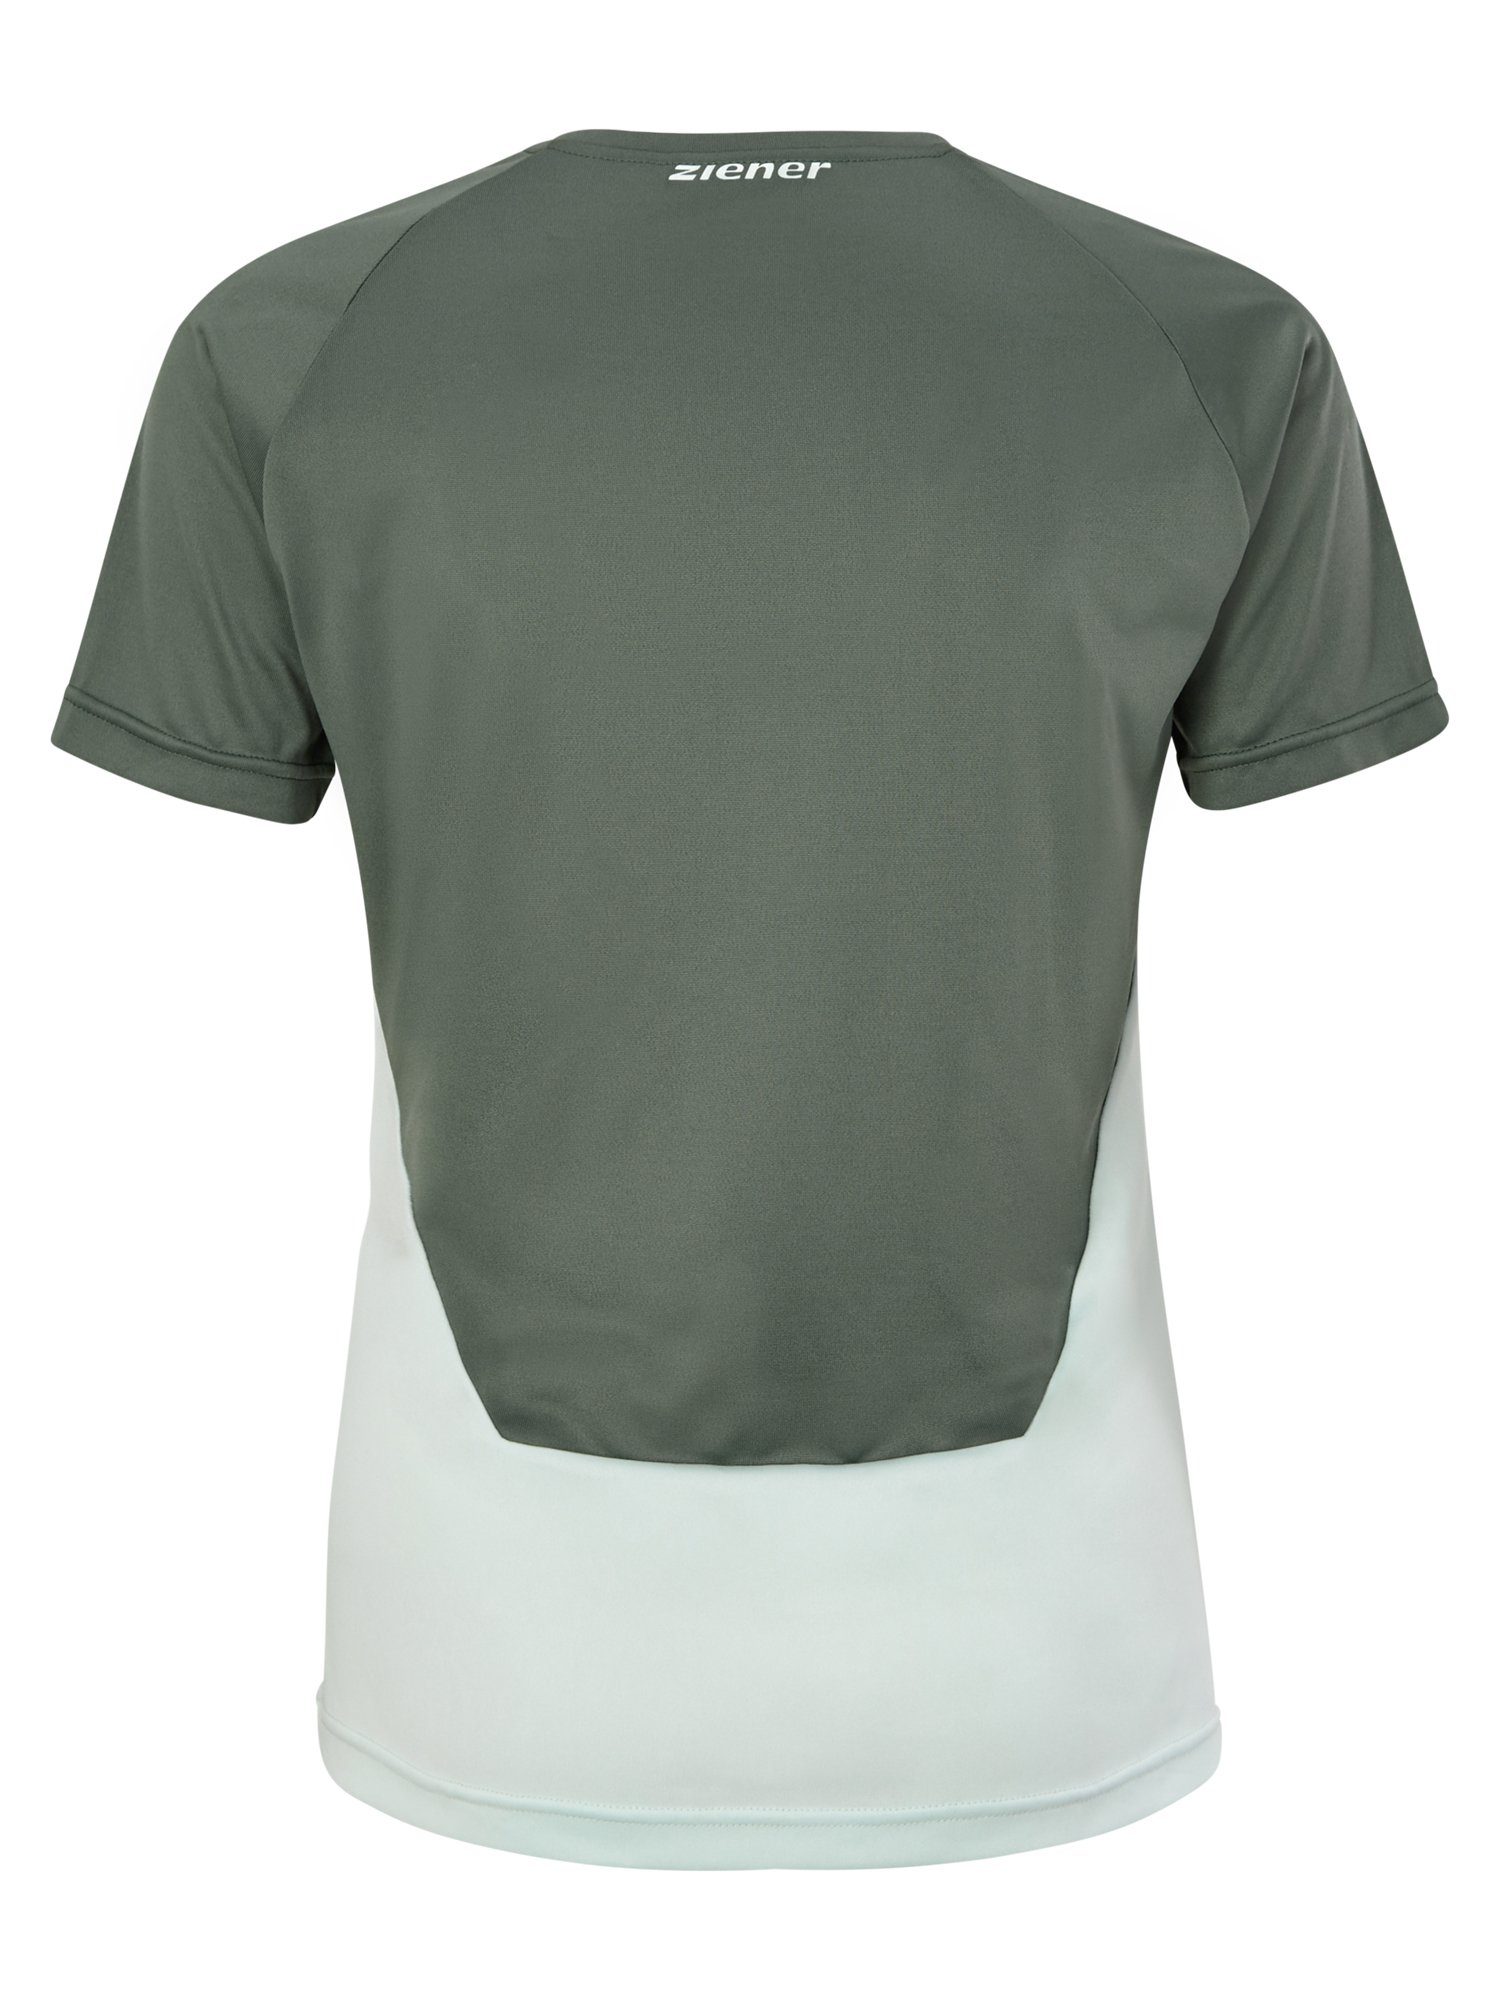 Ziener T-Shirt olivgrün NABUCA